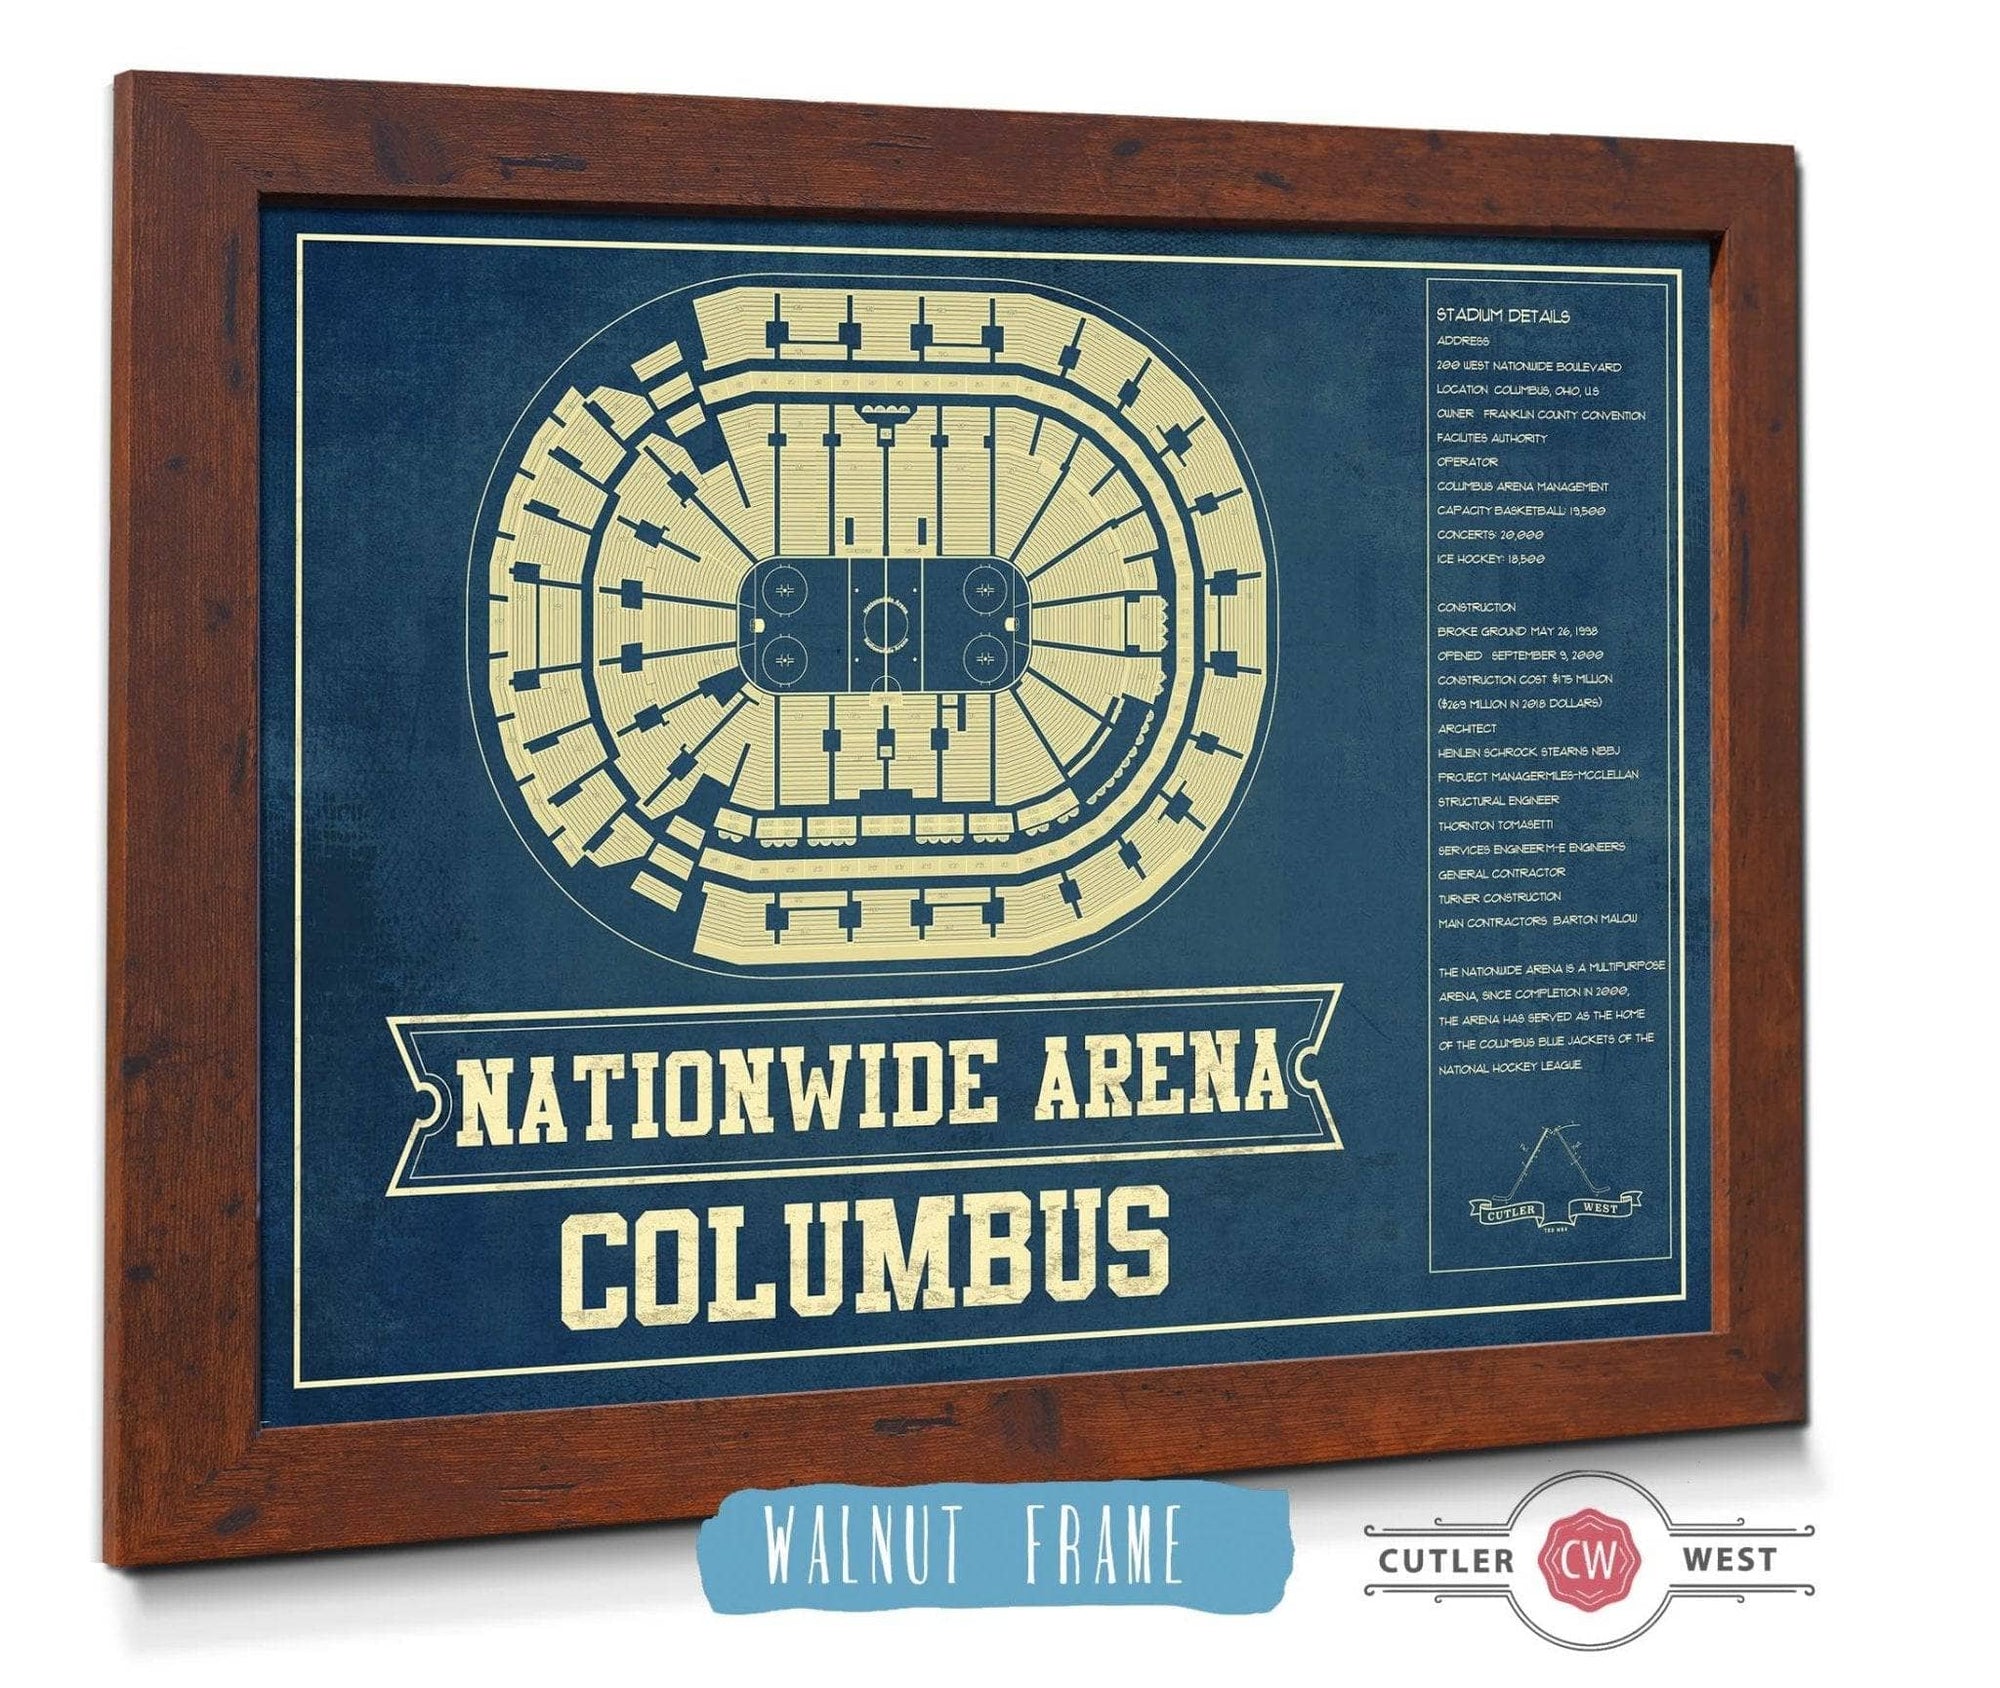 Cutler West 14" x 11" / Walnut Frame Columbus Blue Jackets Nationwide Arena Seating Chart - Vintage Hockey Print 673820723_77952